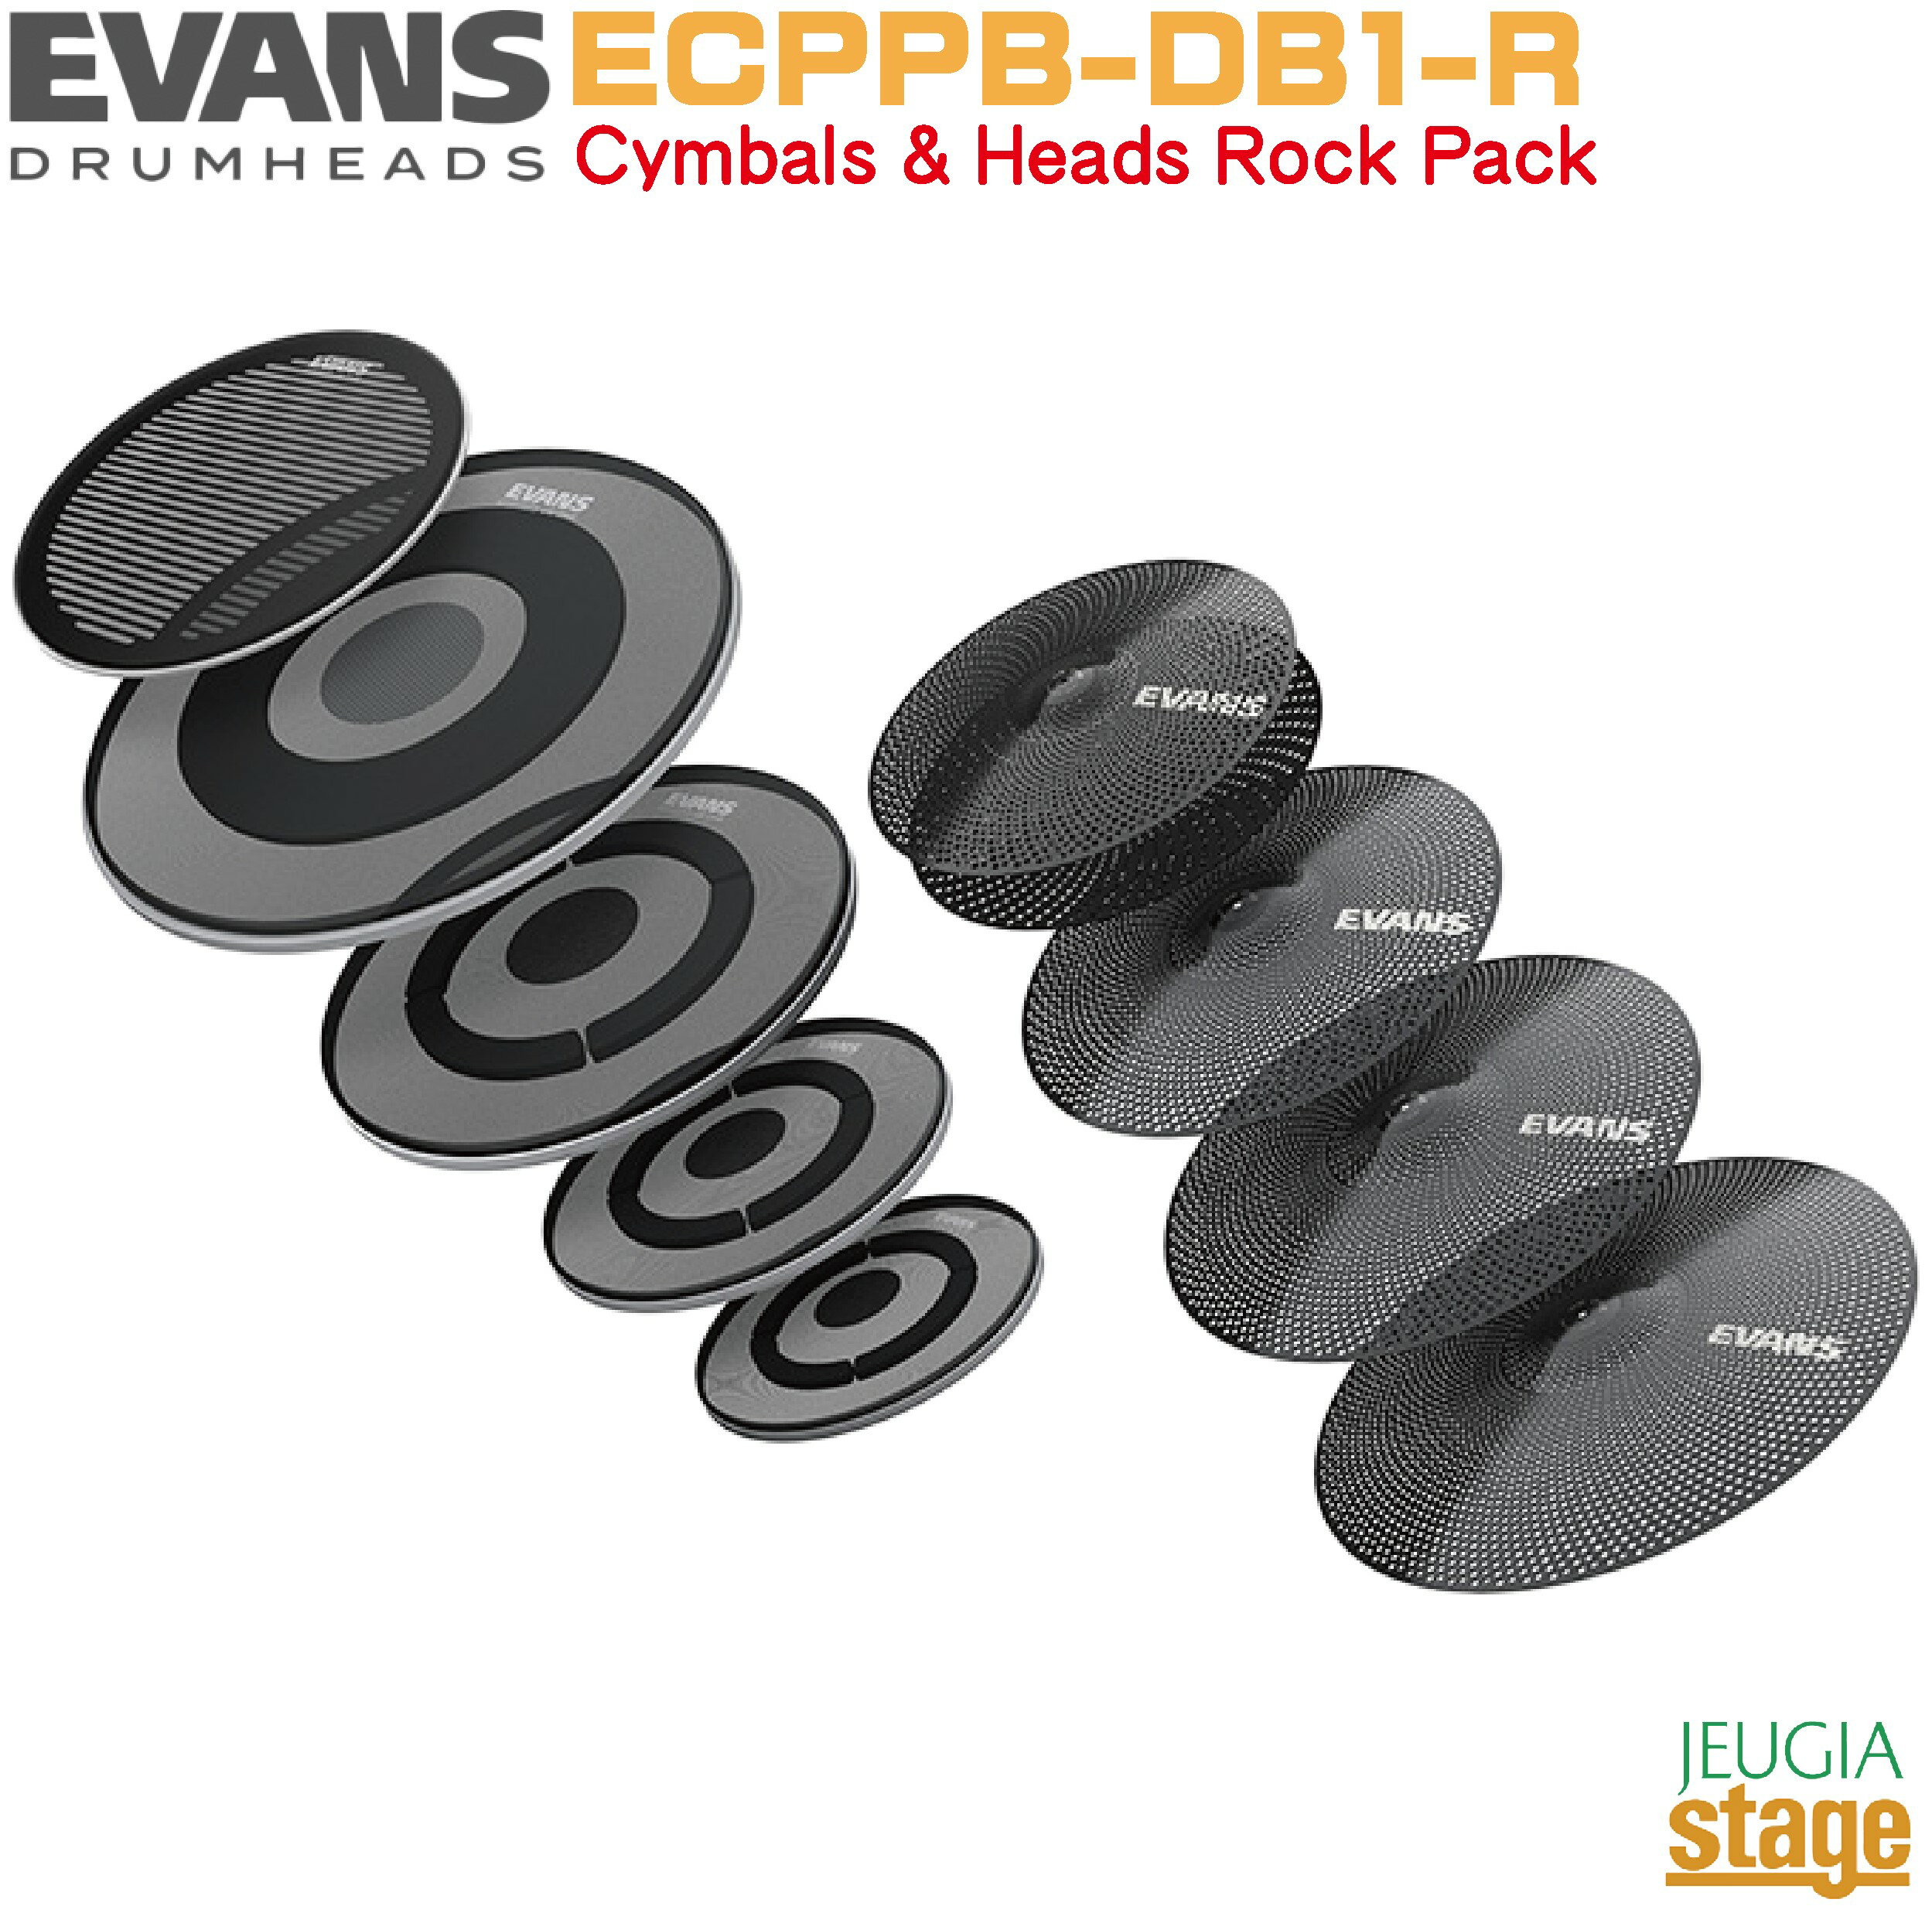 EVANS db One Cymbals & Heads Rock Pack(ECPPB-DB1-R) エヴァンス 音量低減シンバル&ヘッドパック【Stage-Rakuten D…